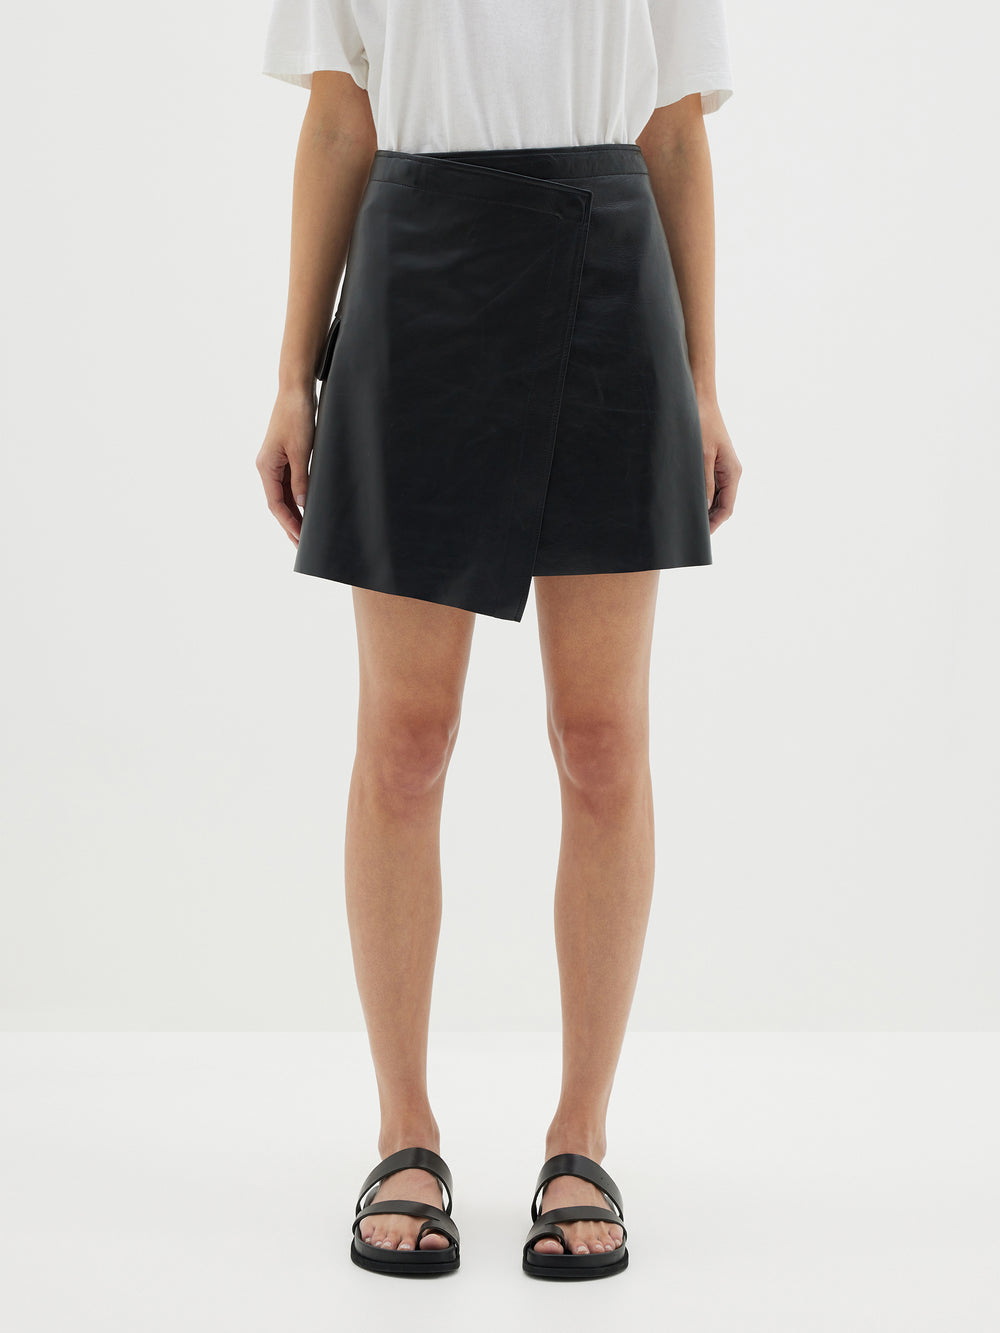 leather wrap mini skirt